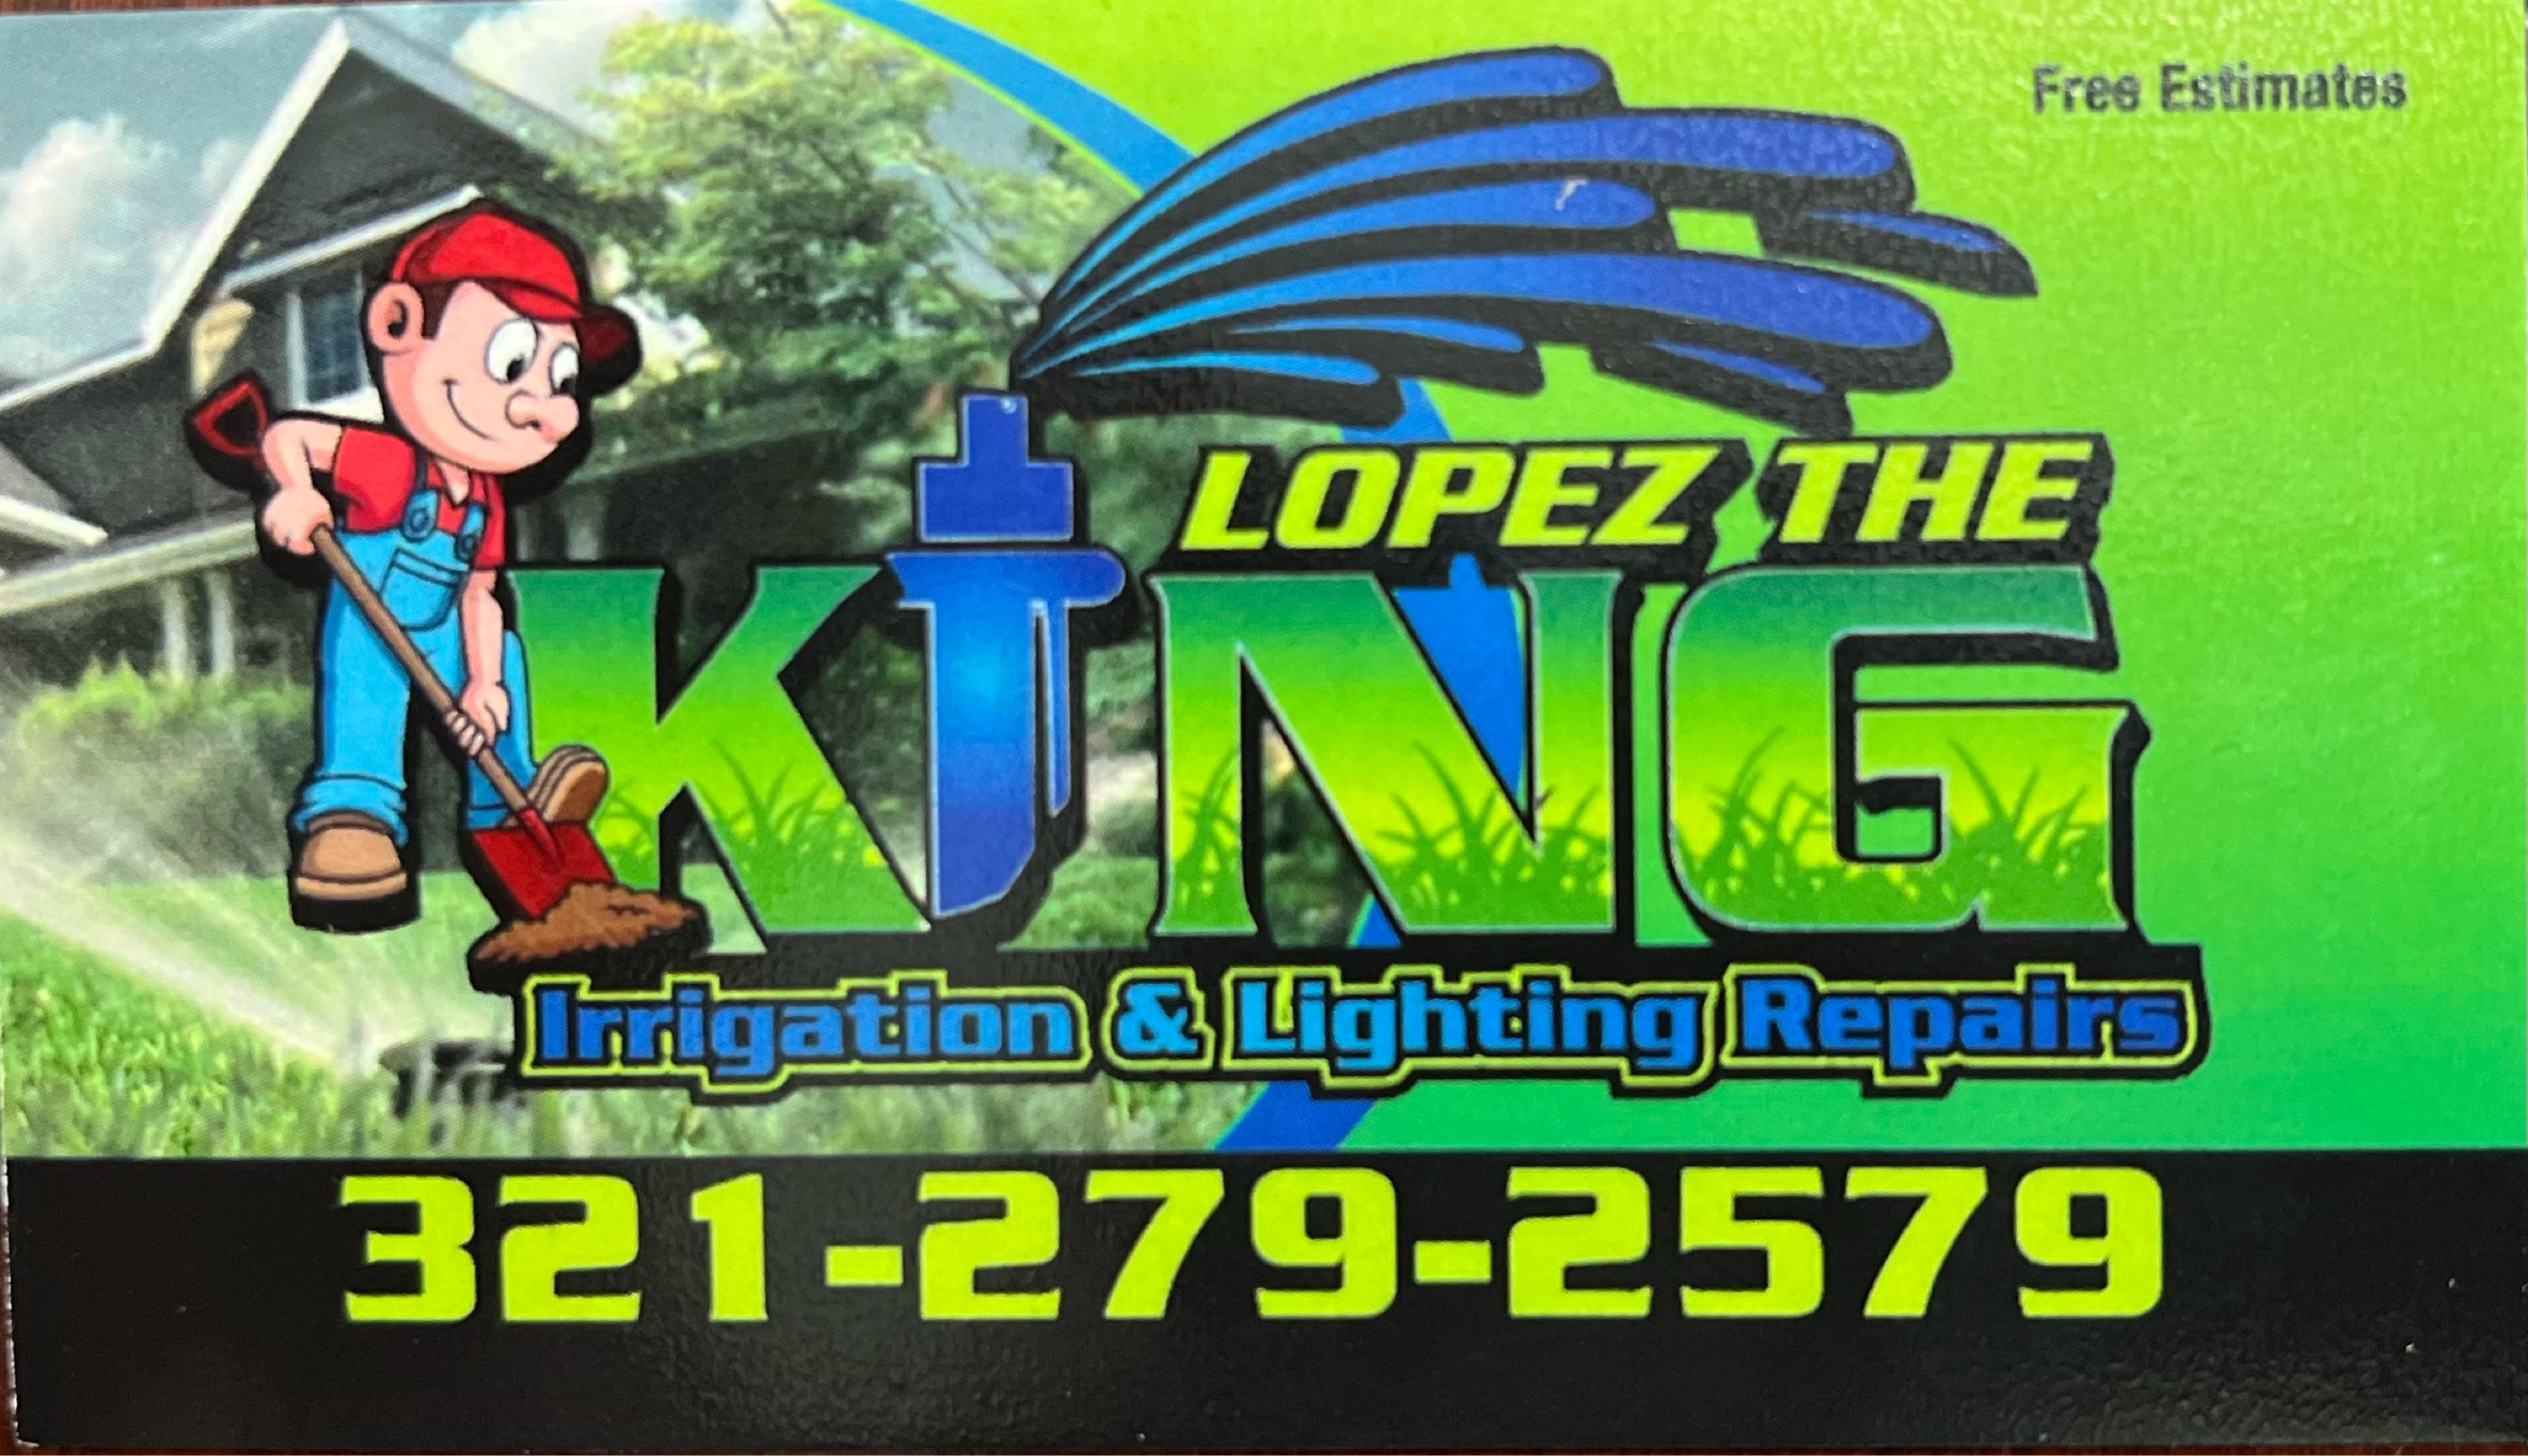 Lopez The King Irrigation Repair Logo